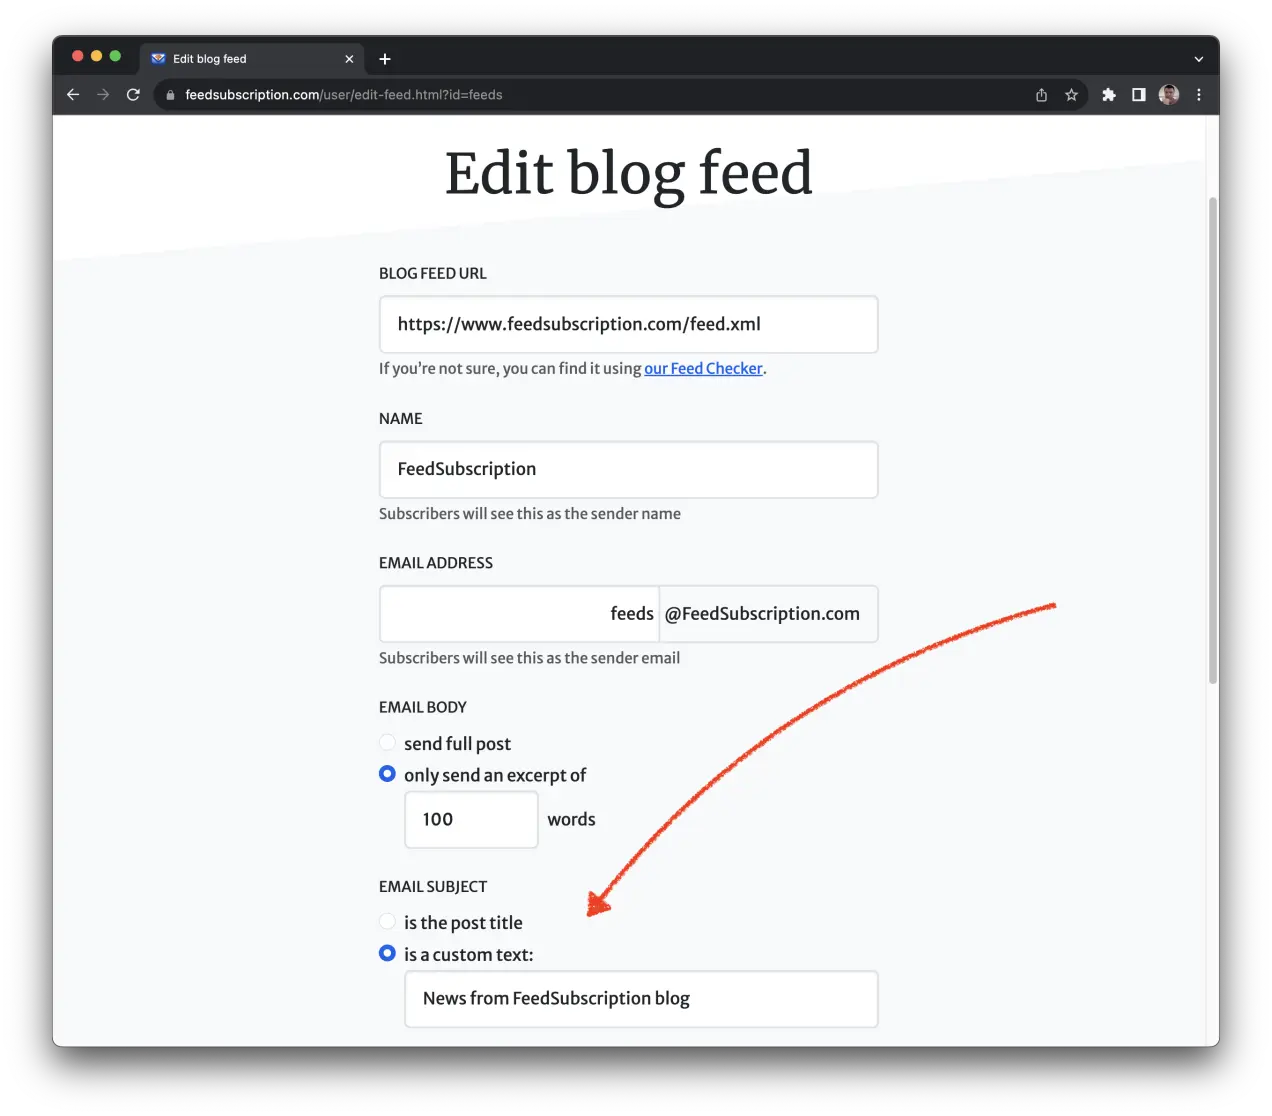 A screenshot of the “Edit blog feed” form